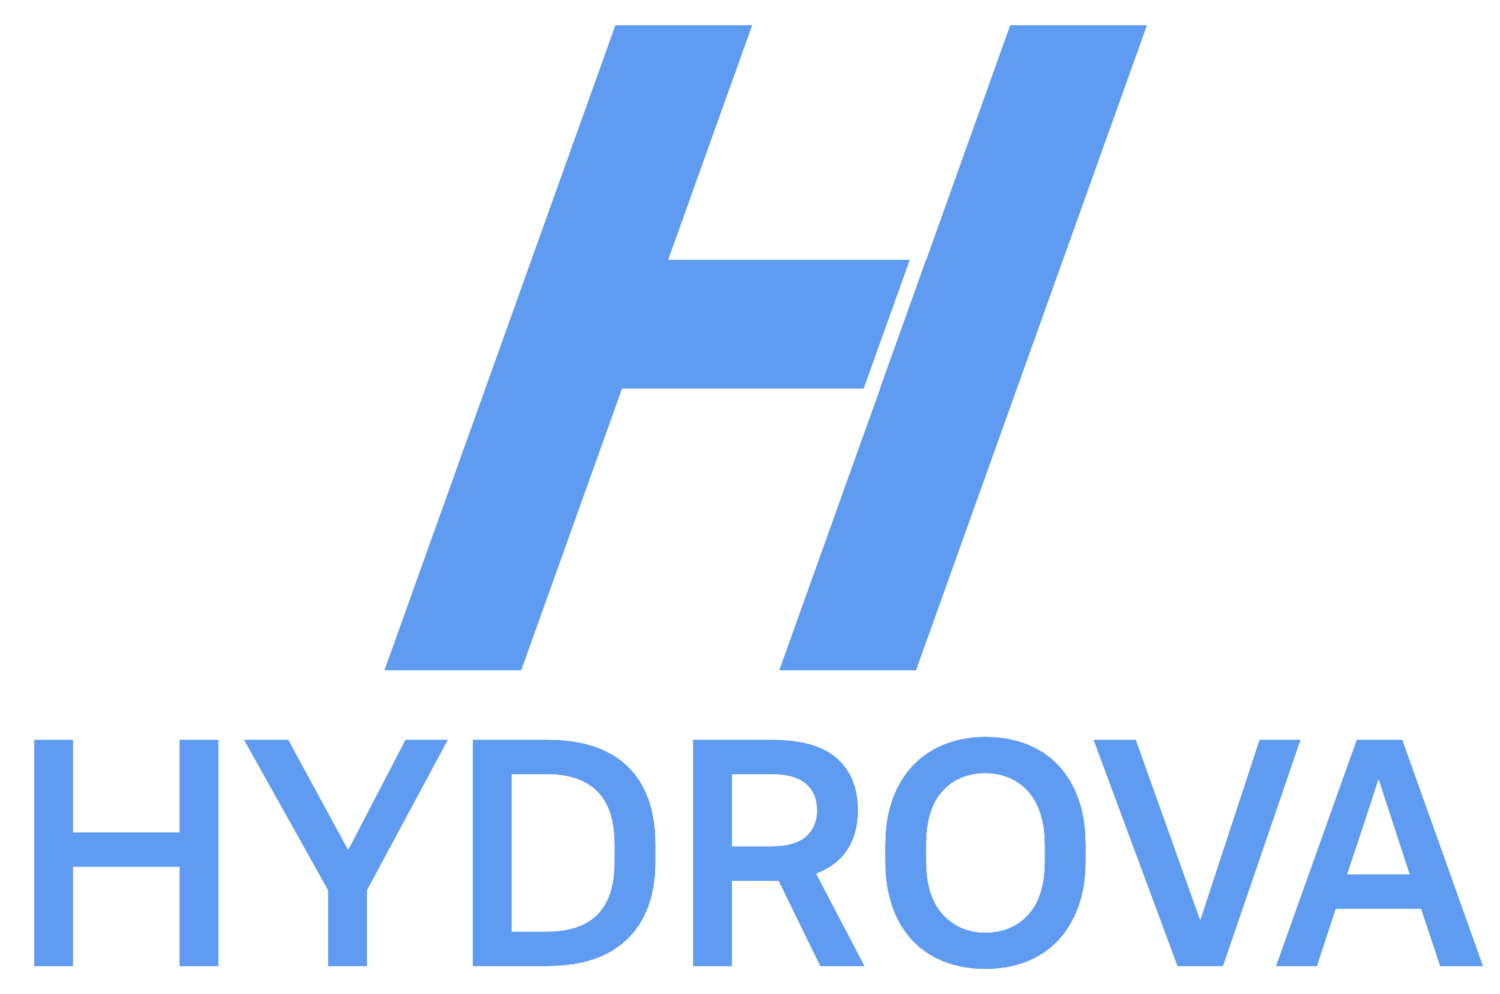 Hydrova